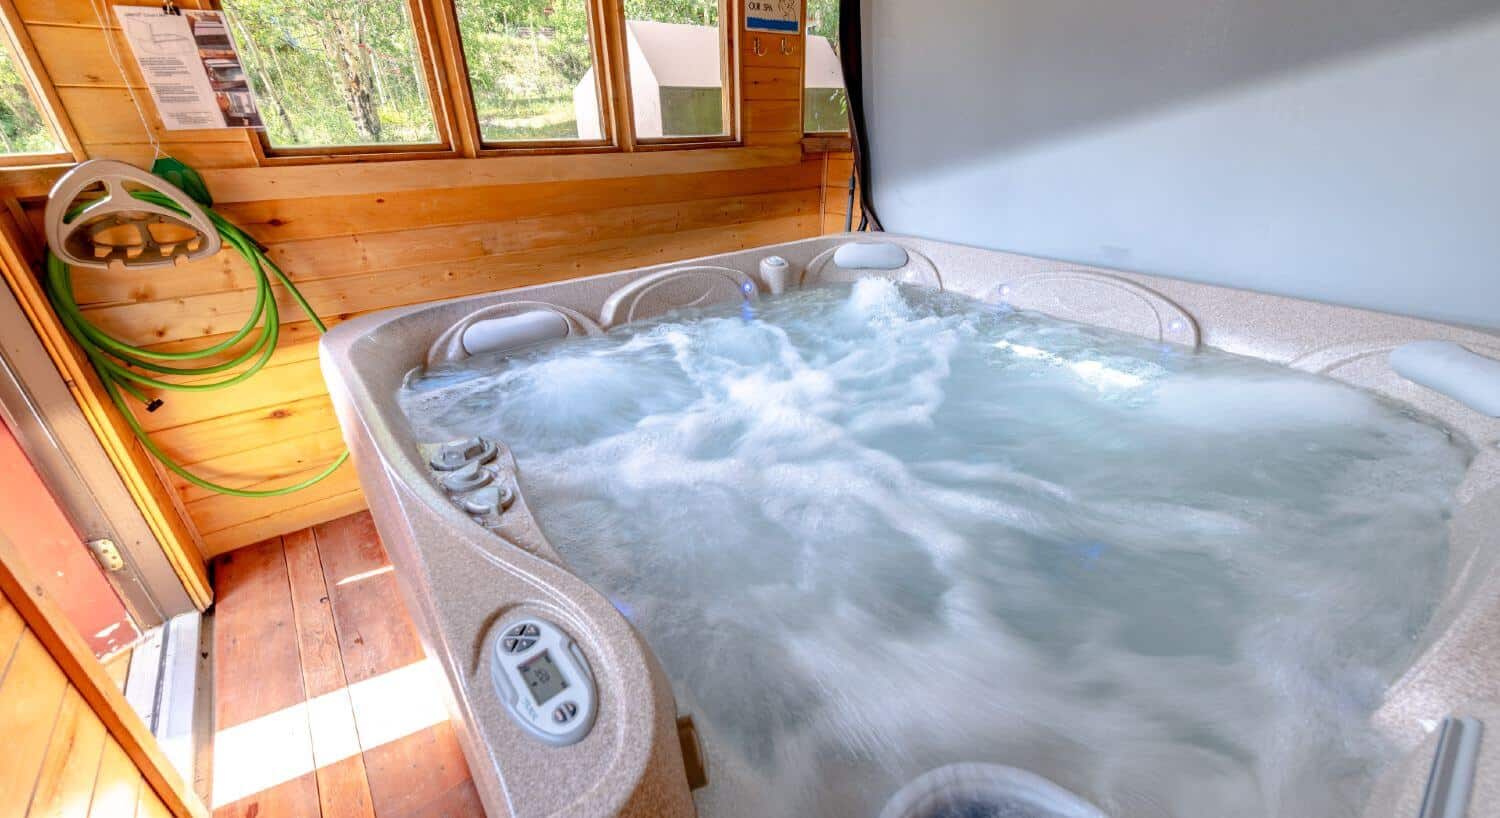 Bubbling hot tub in a gazebo with windows.